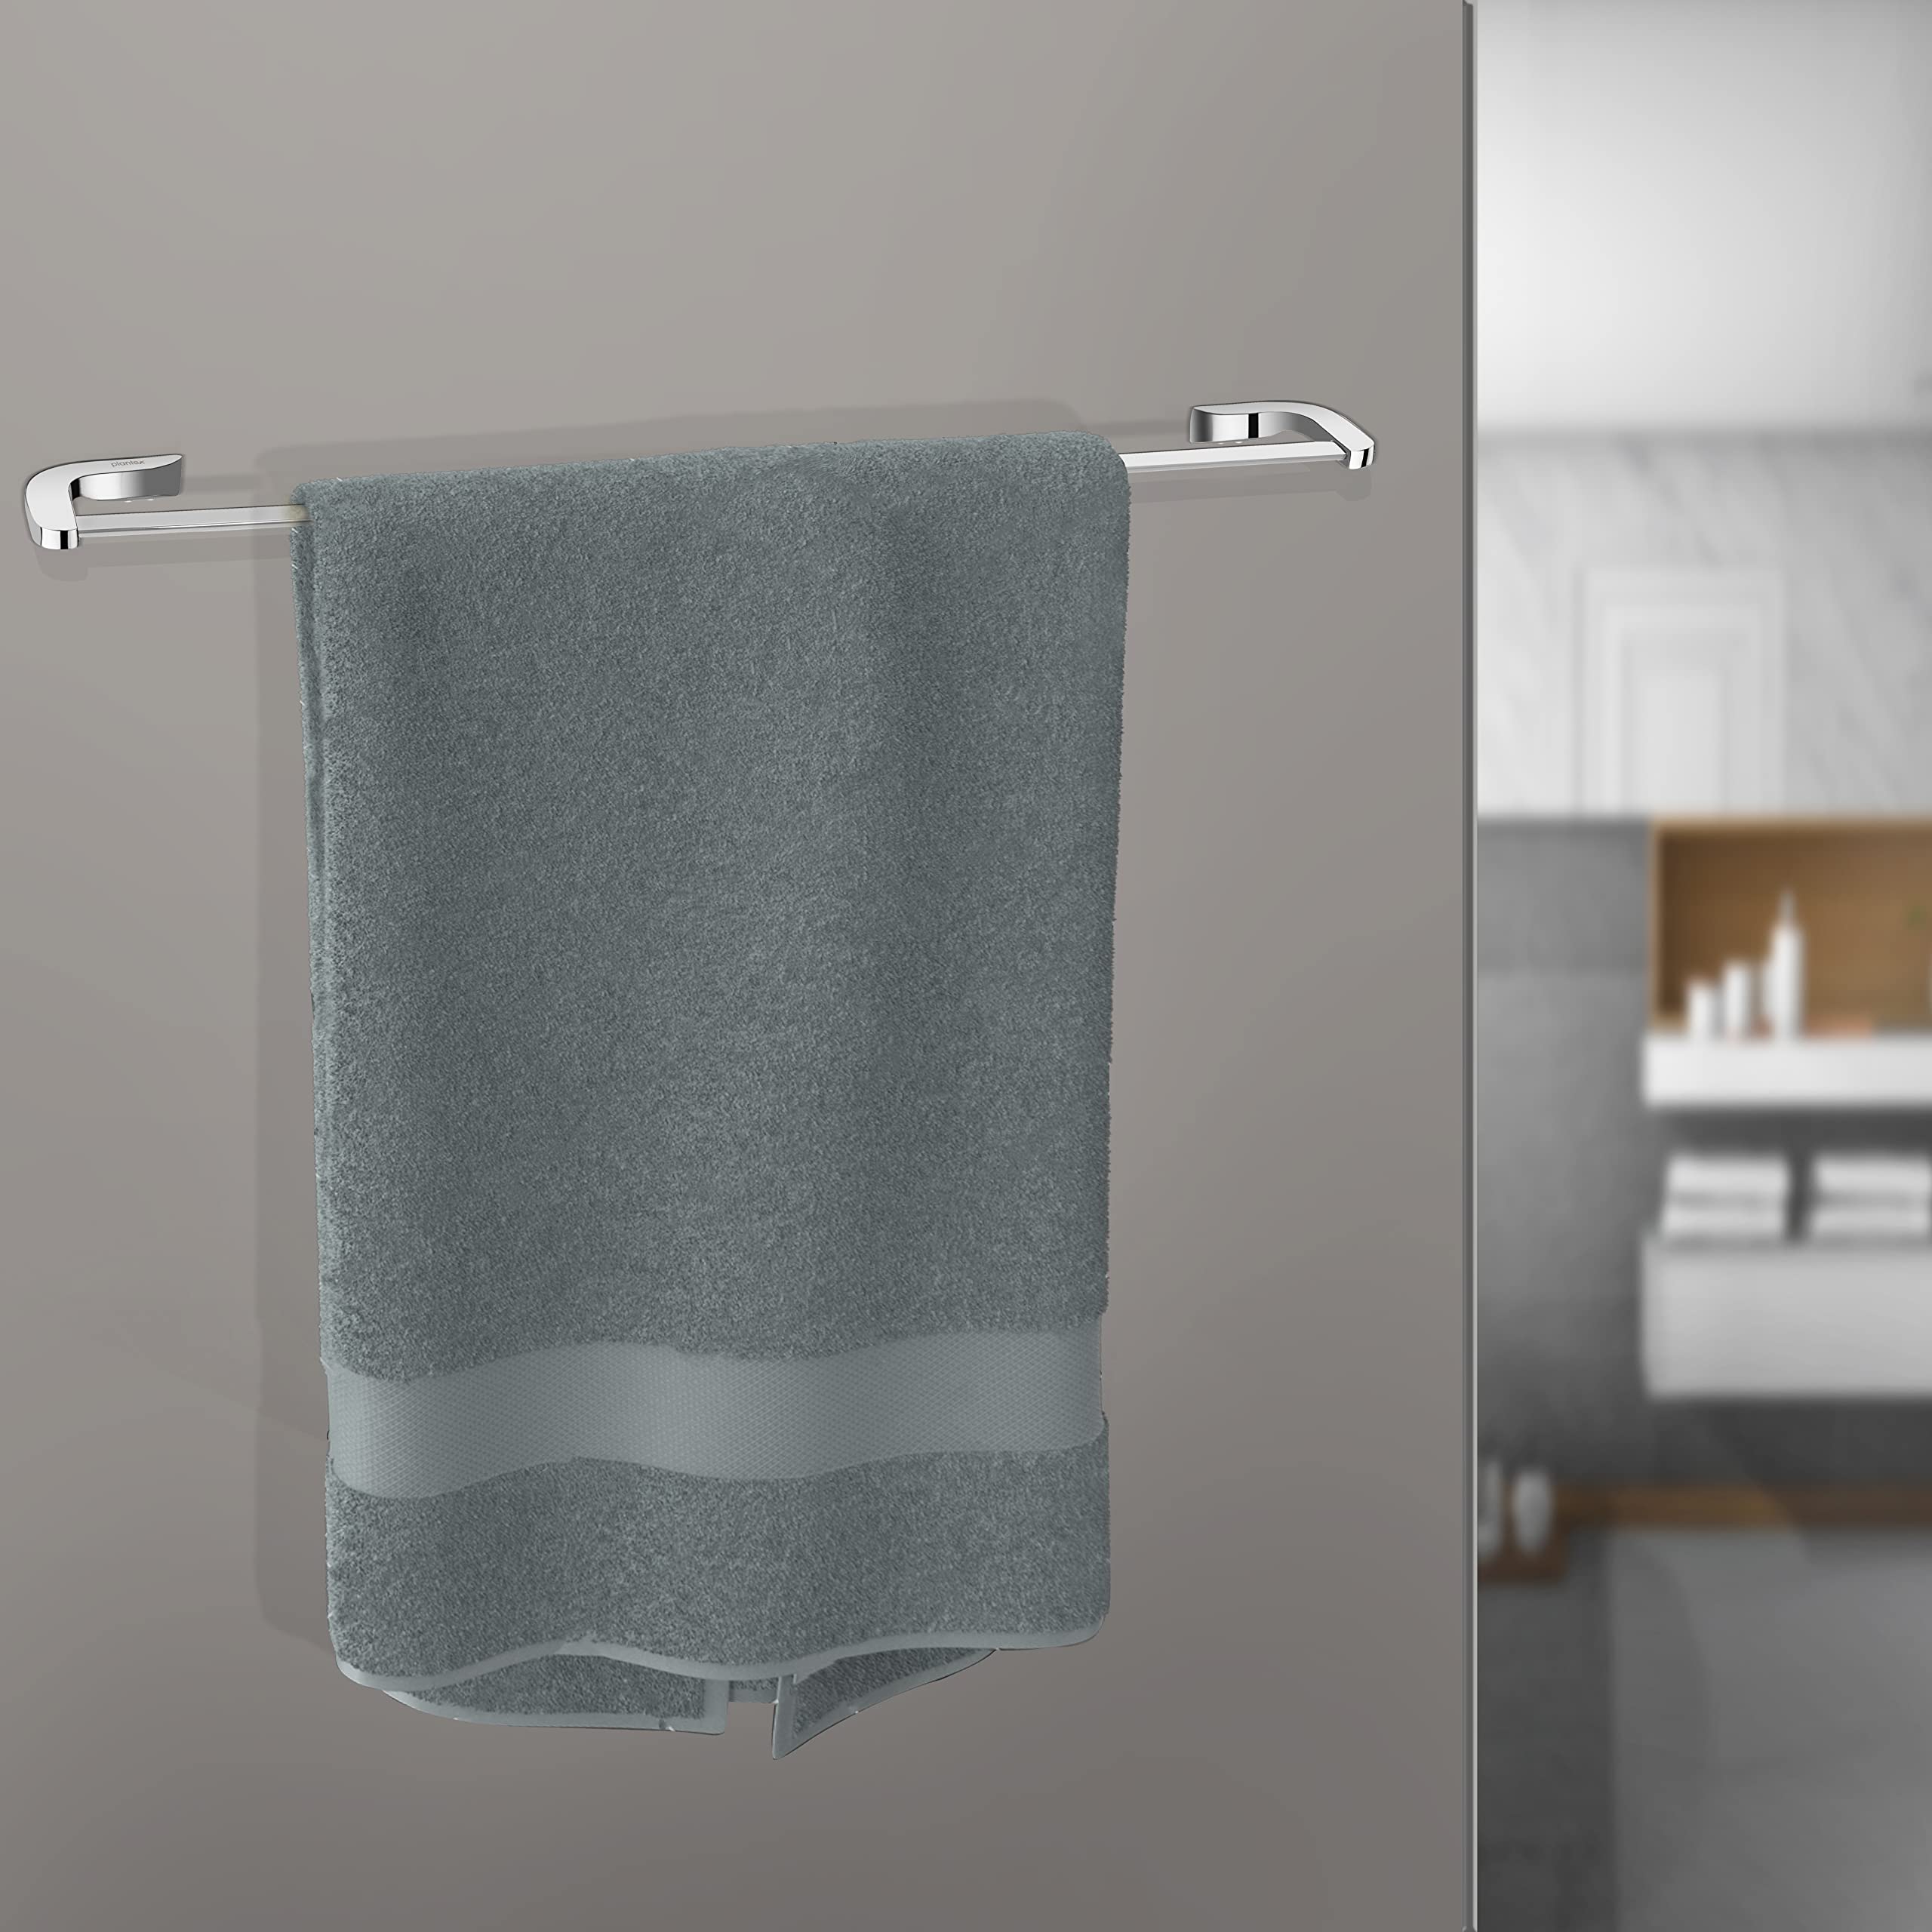 Plantex Smero Fully Brass Towel Rod/Rack for Bathroom/Hanger/Towel Stand/Holder Bathroom Accessories - 24 Inch,Chrome (AQ-8132)